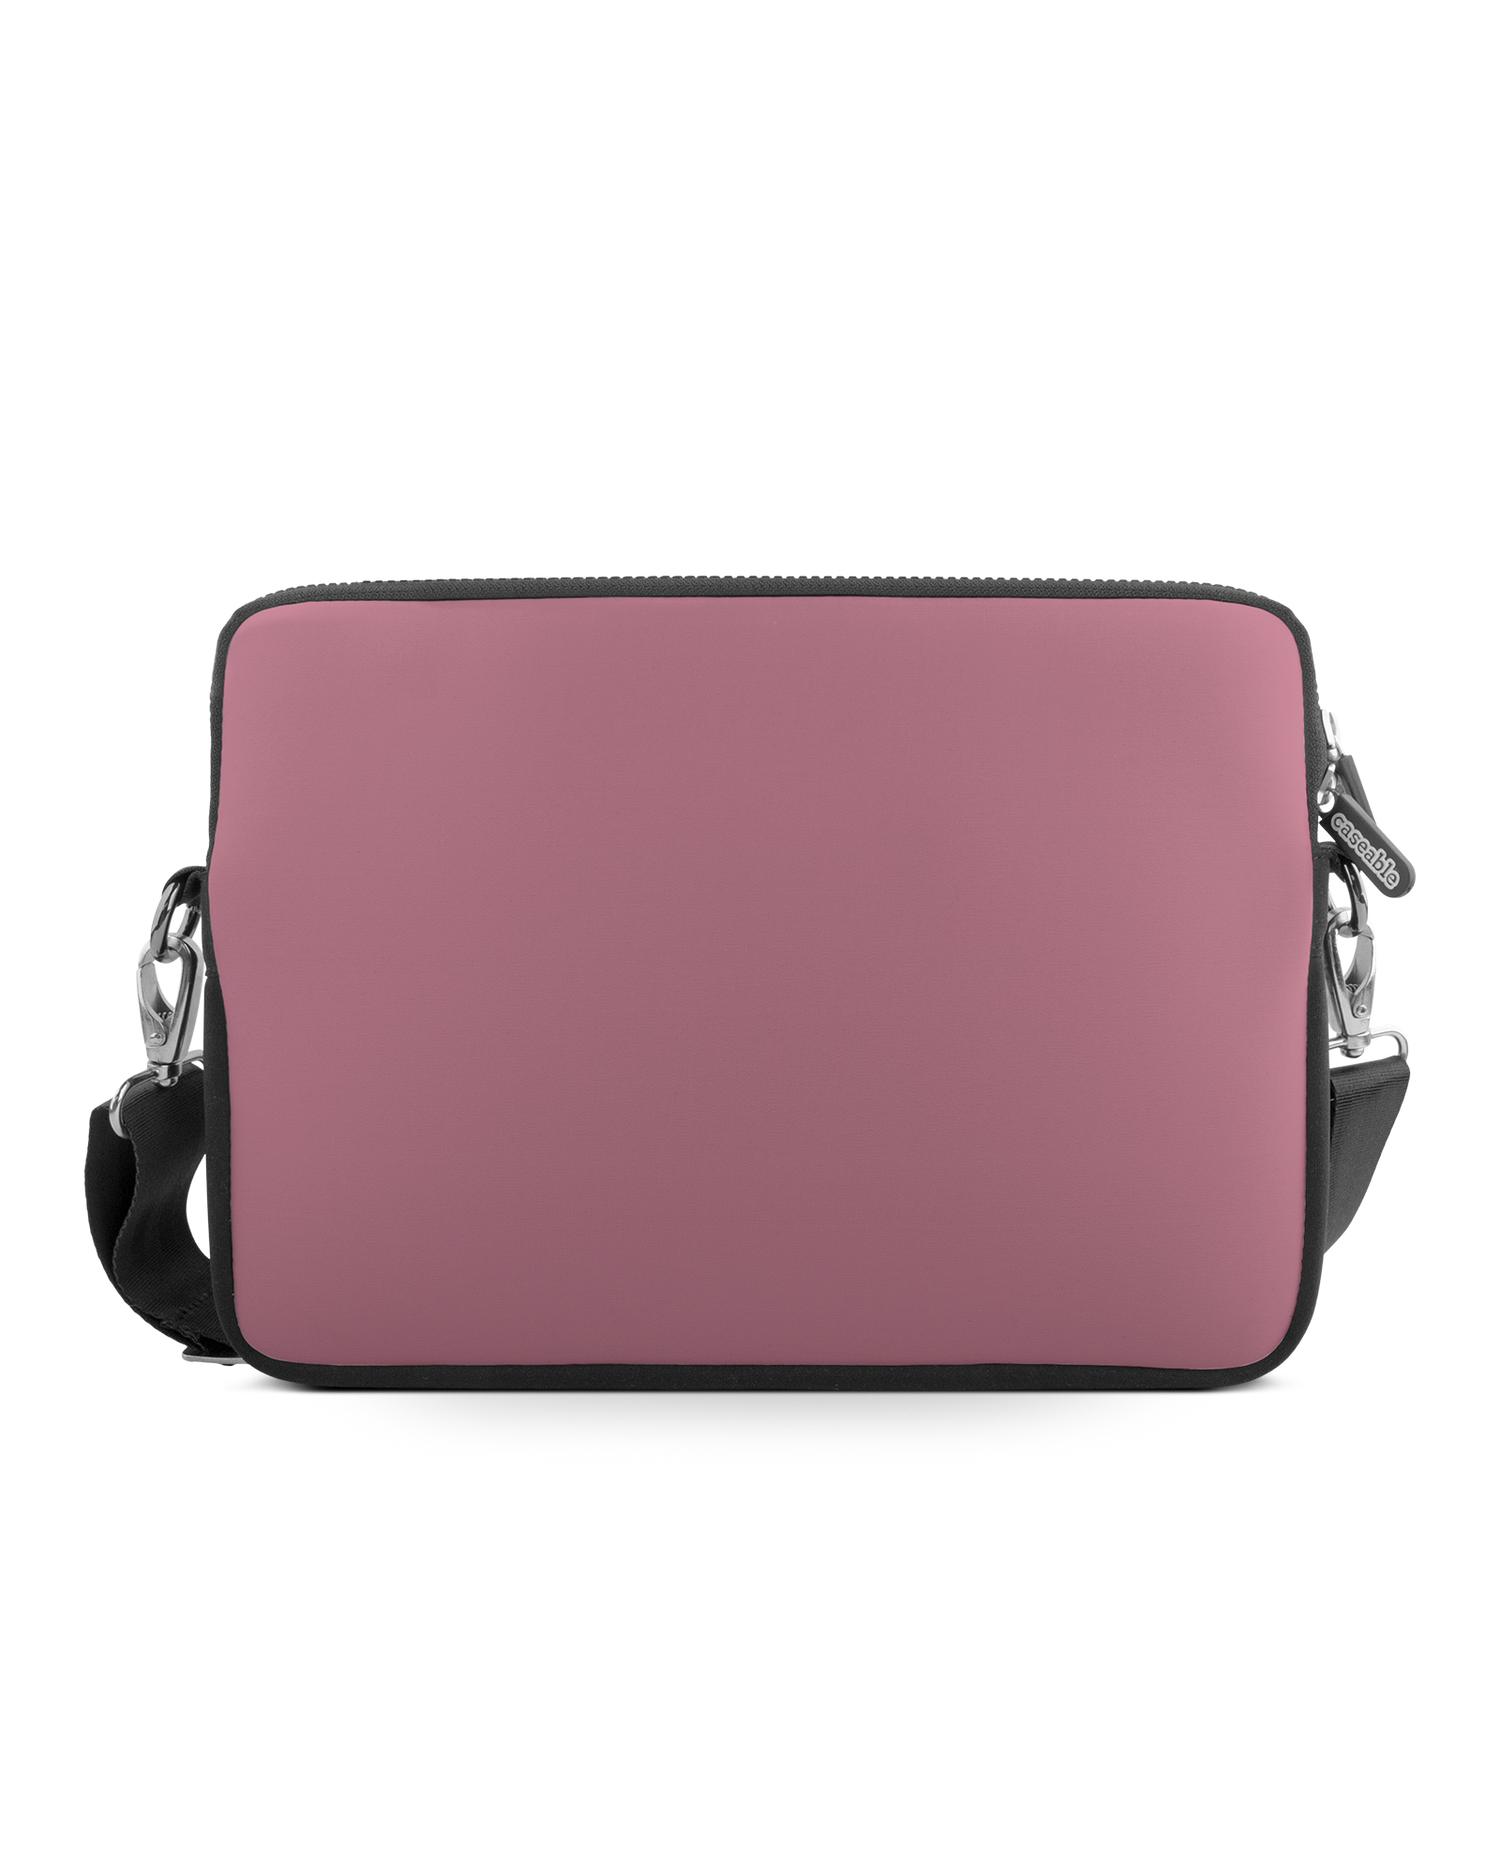 WILD ROSE Premium Laptop Bag 13 inch: Front View